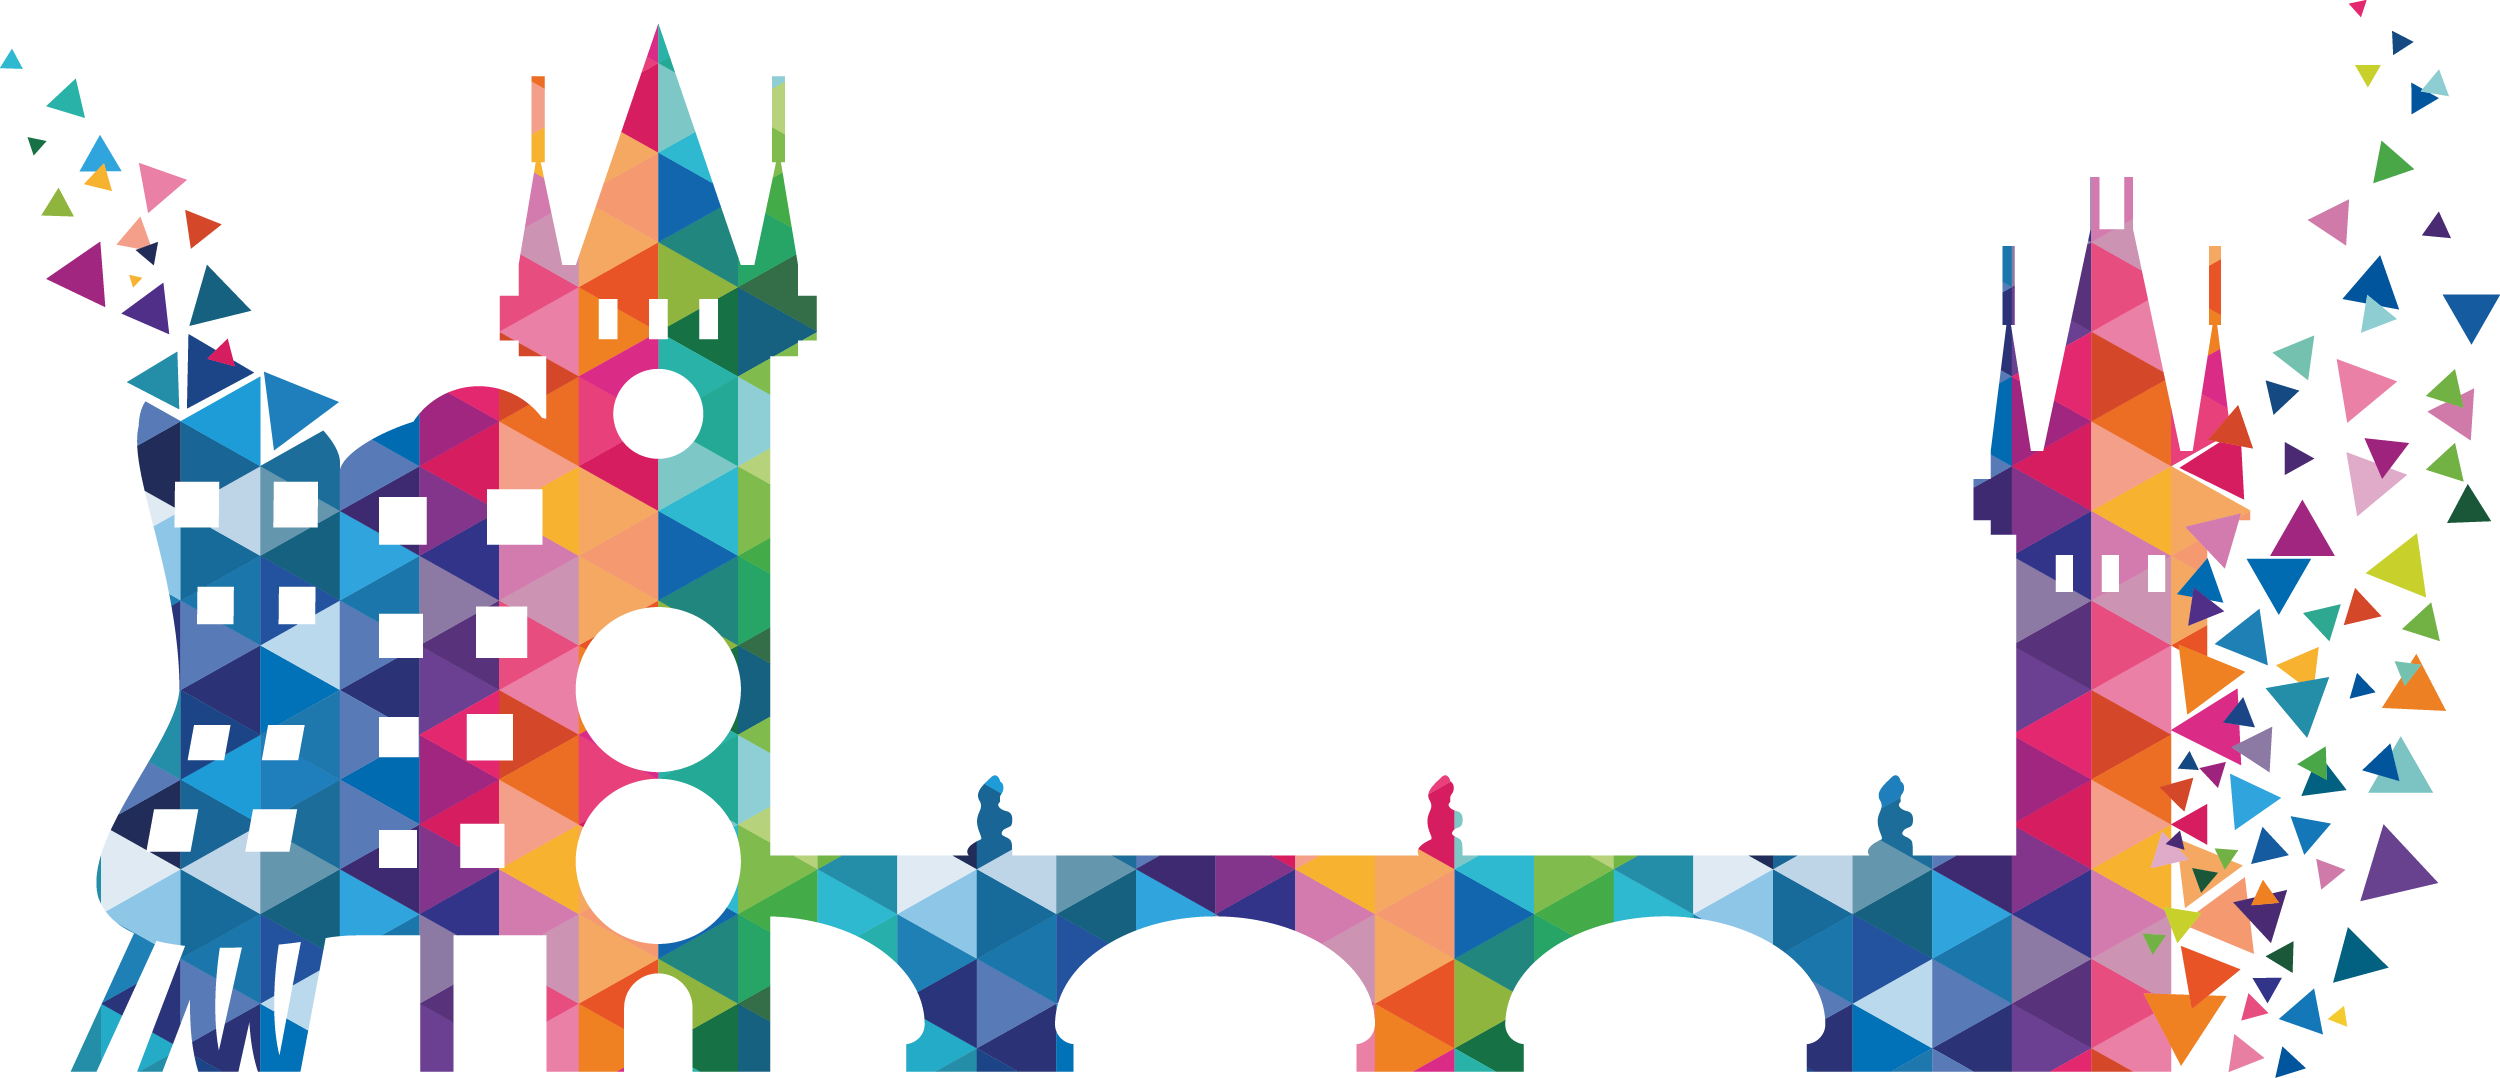 DrupalCon Europe 2022 bude na jeseň v Prahe